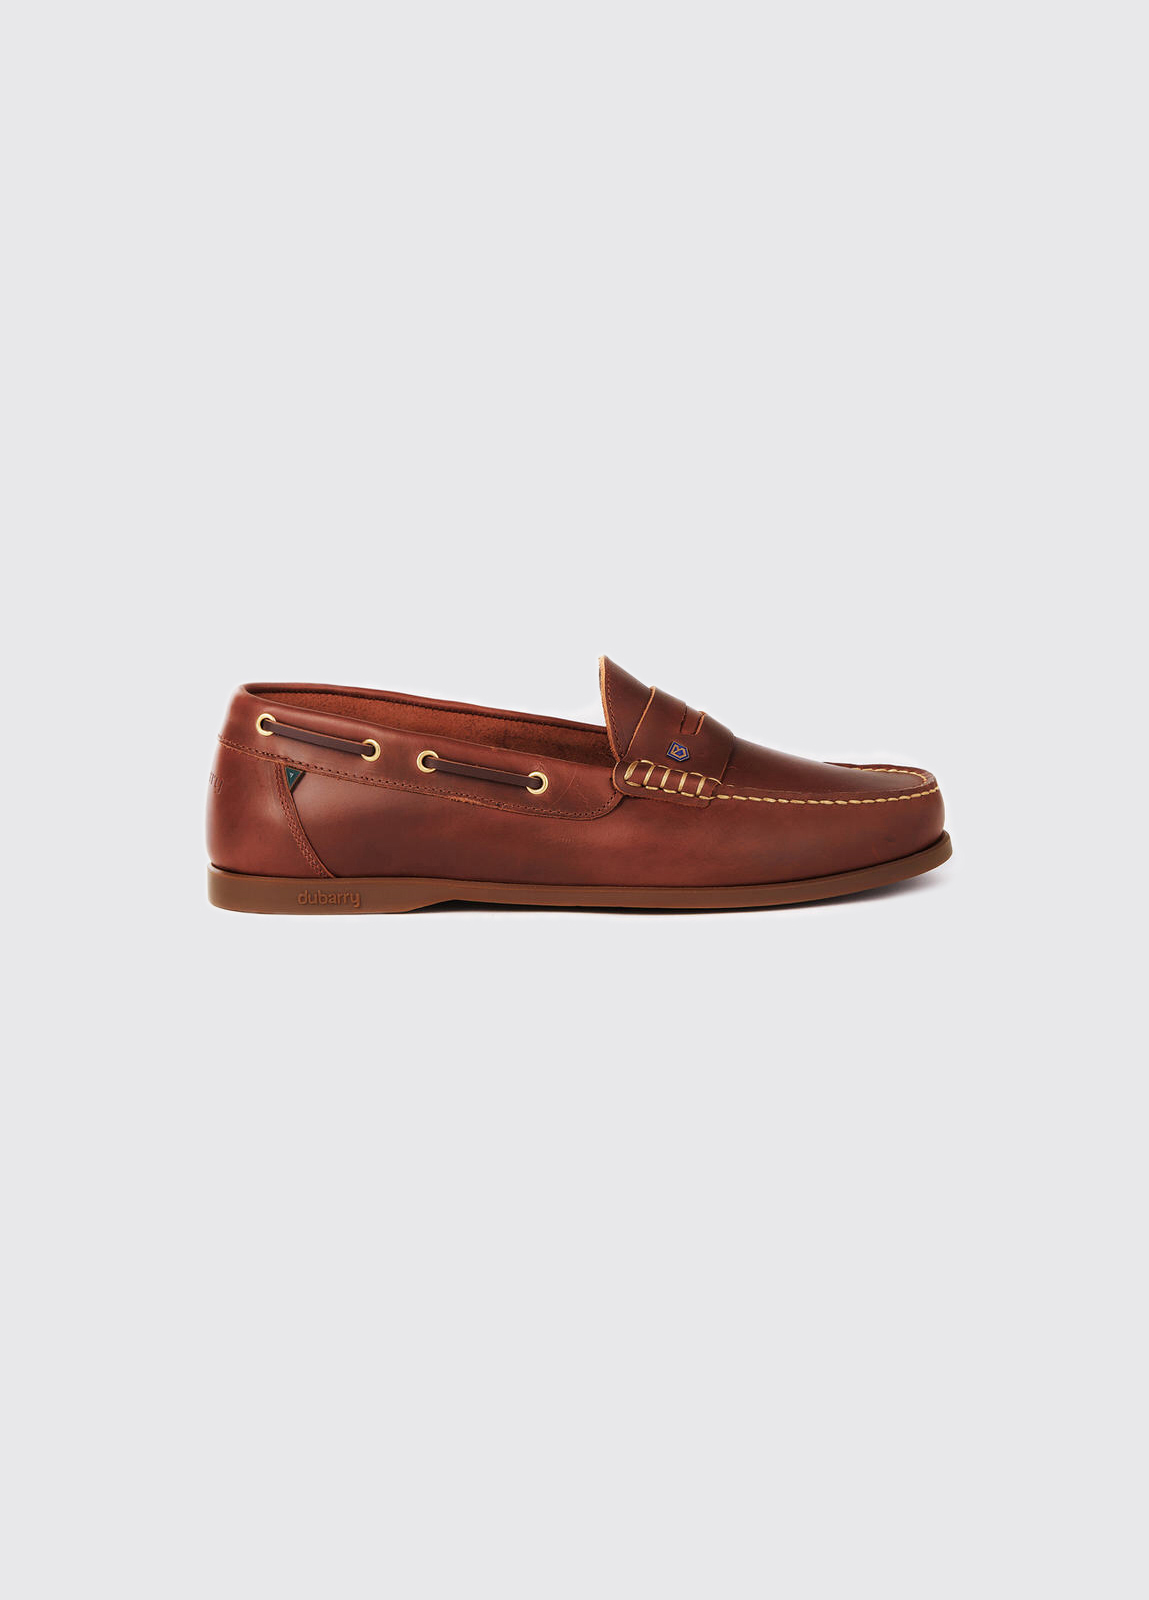 Sailing Shoes Slip On Leather SALE Dubarry Mens Spinnaker Brown Deck Shoe 